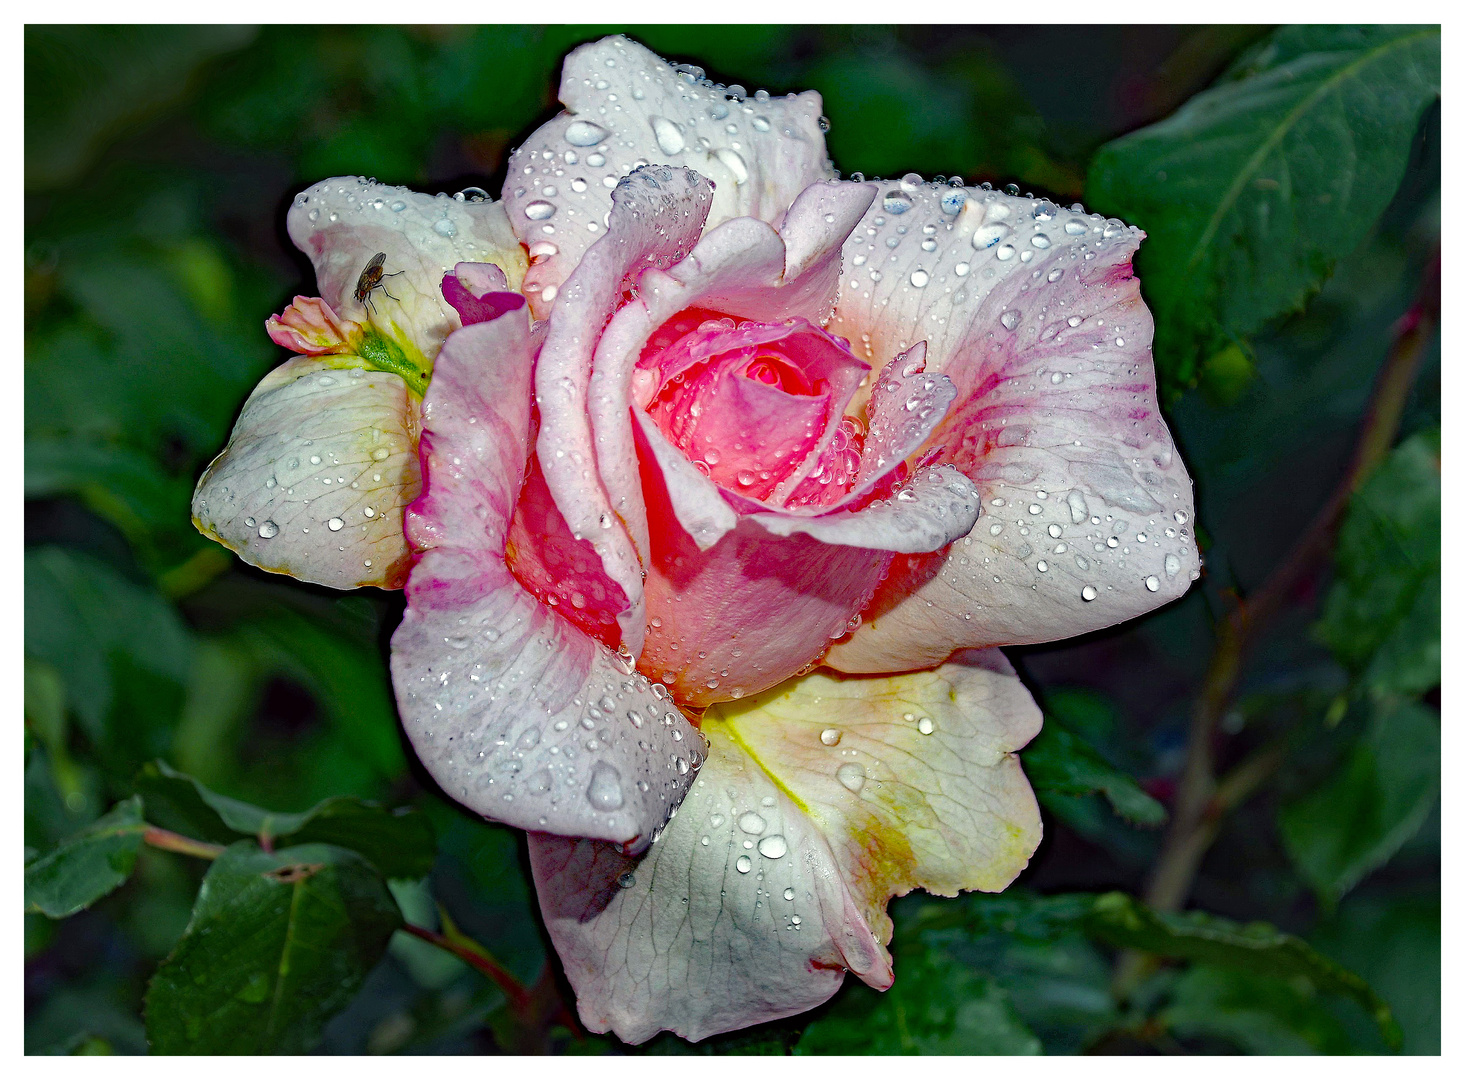  dernière  rose d automne  au jardin....